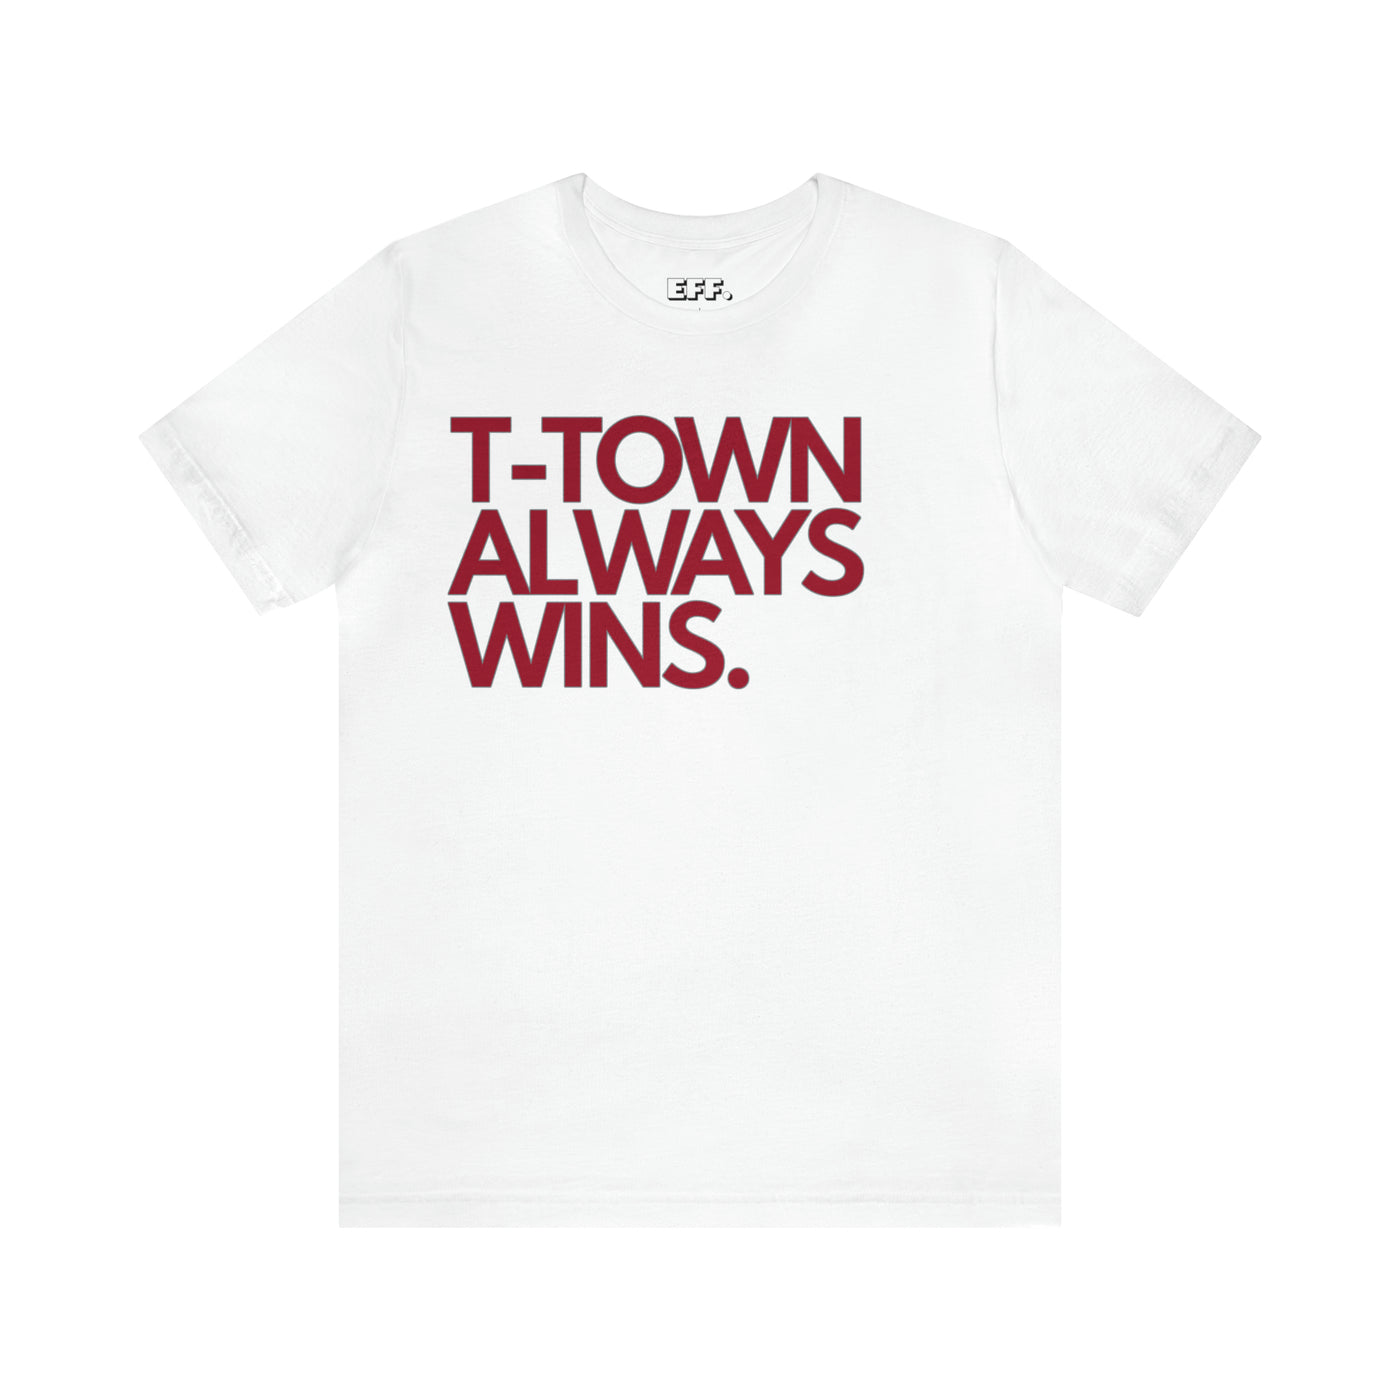 T-Town Always Wins.